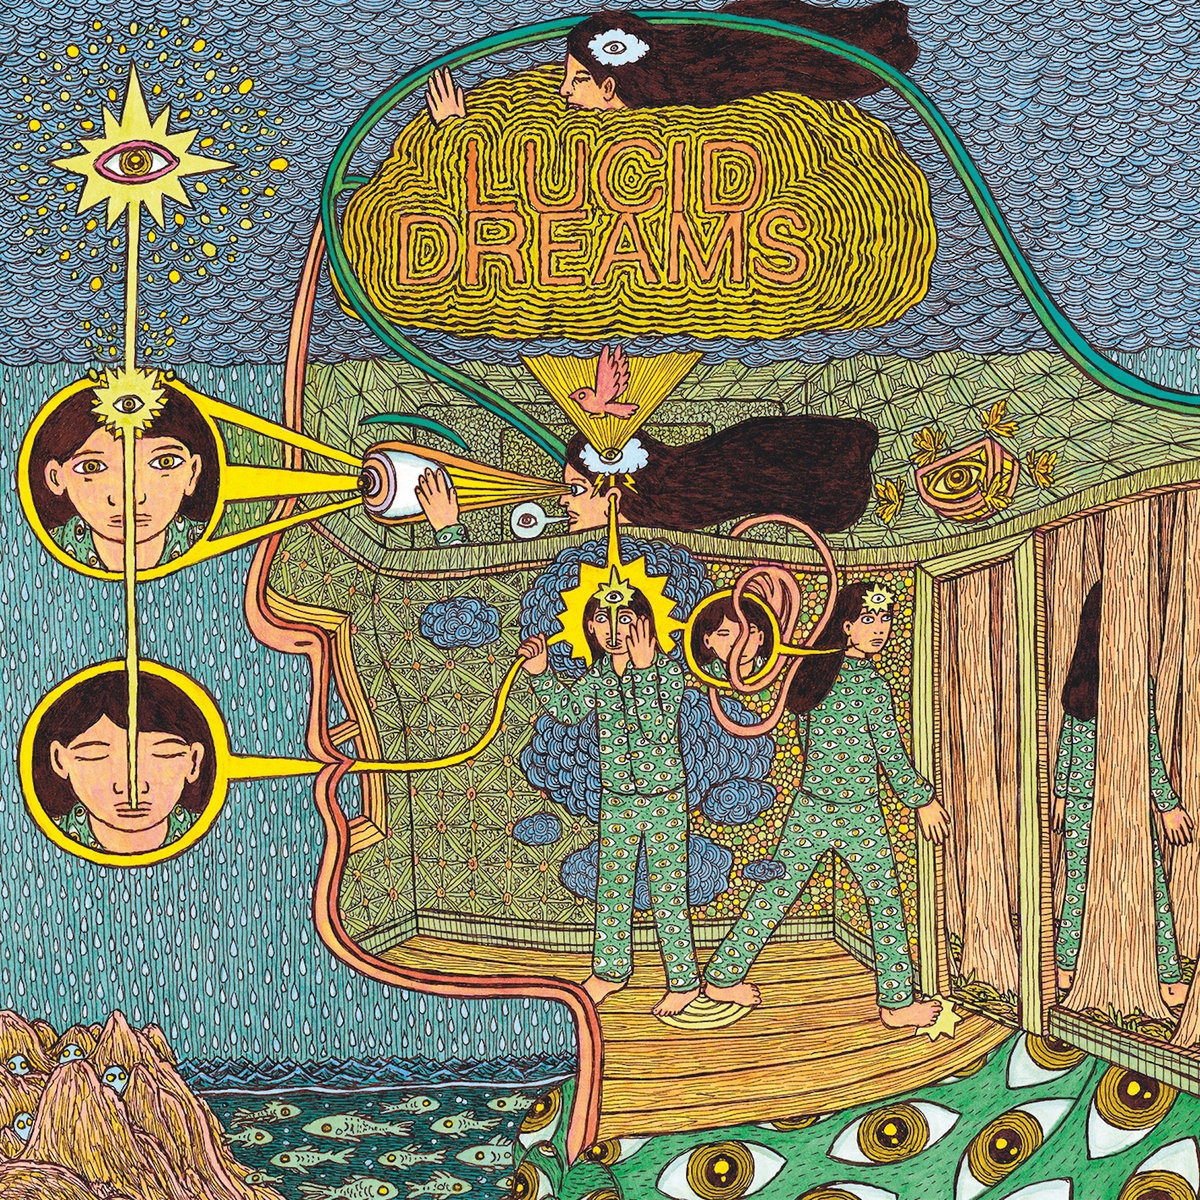 Lucid Dreams - Lucid Dreams vinyl cover